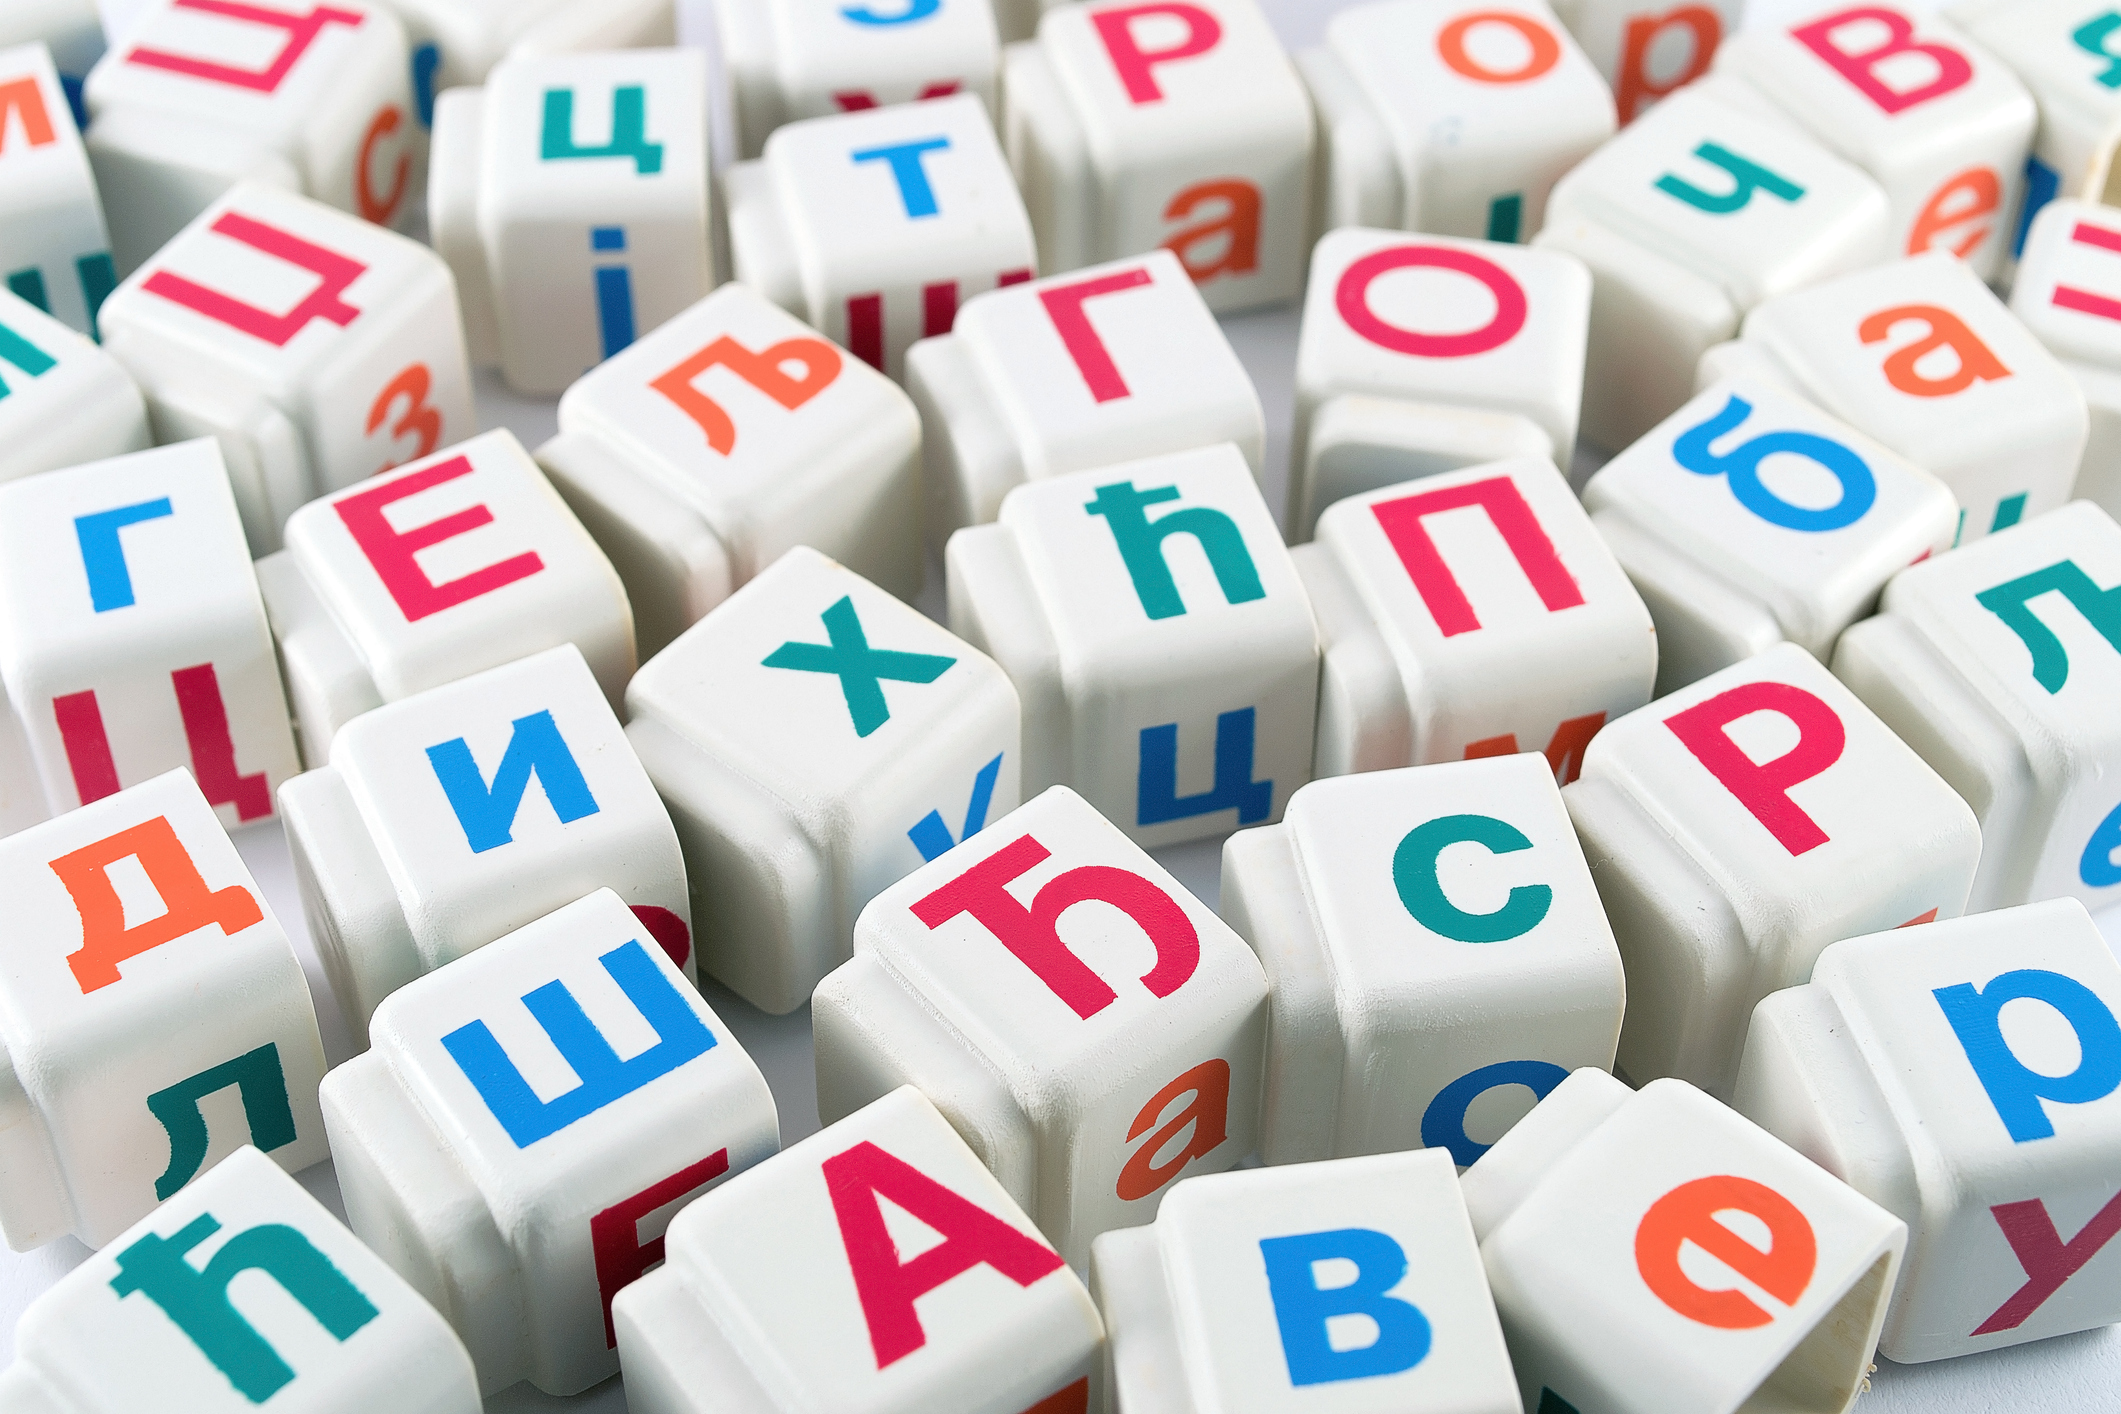 Random display of Russian alphabet squares